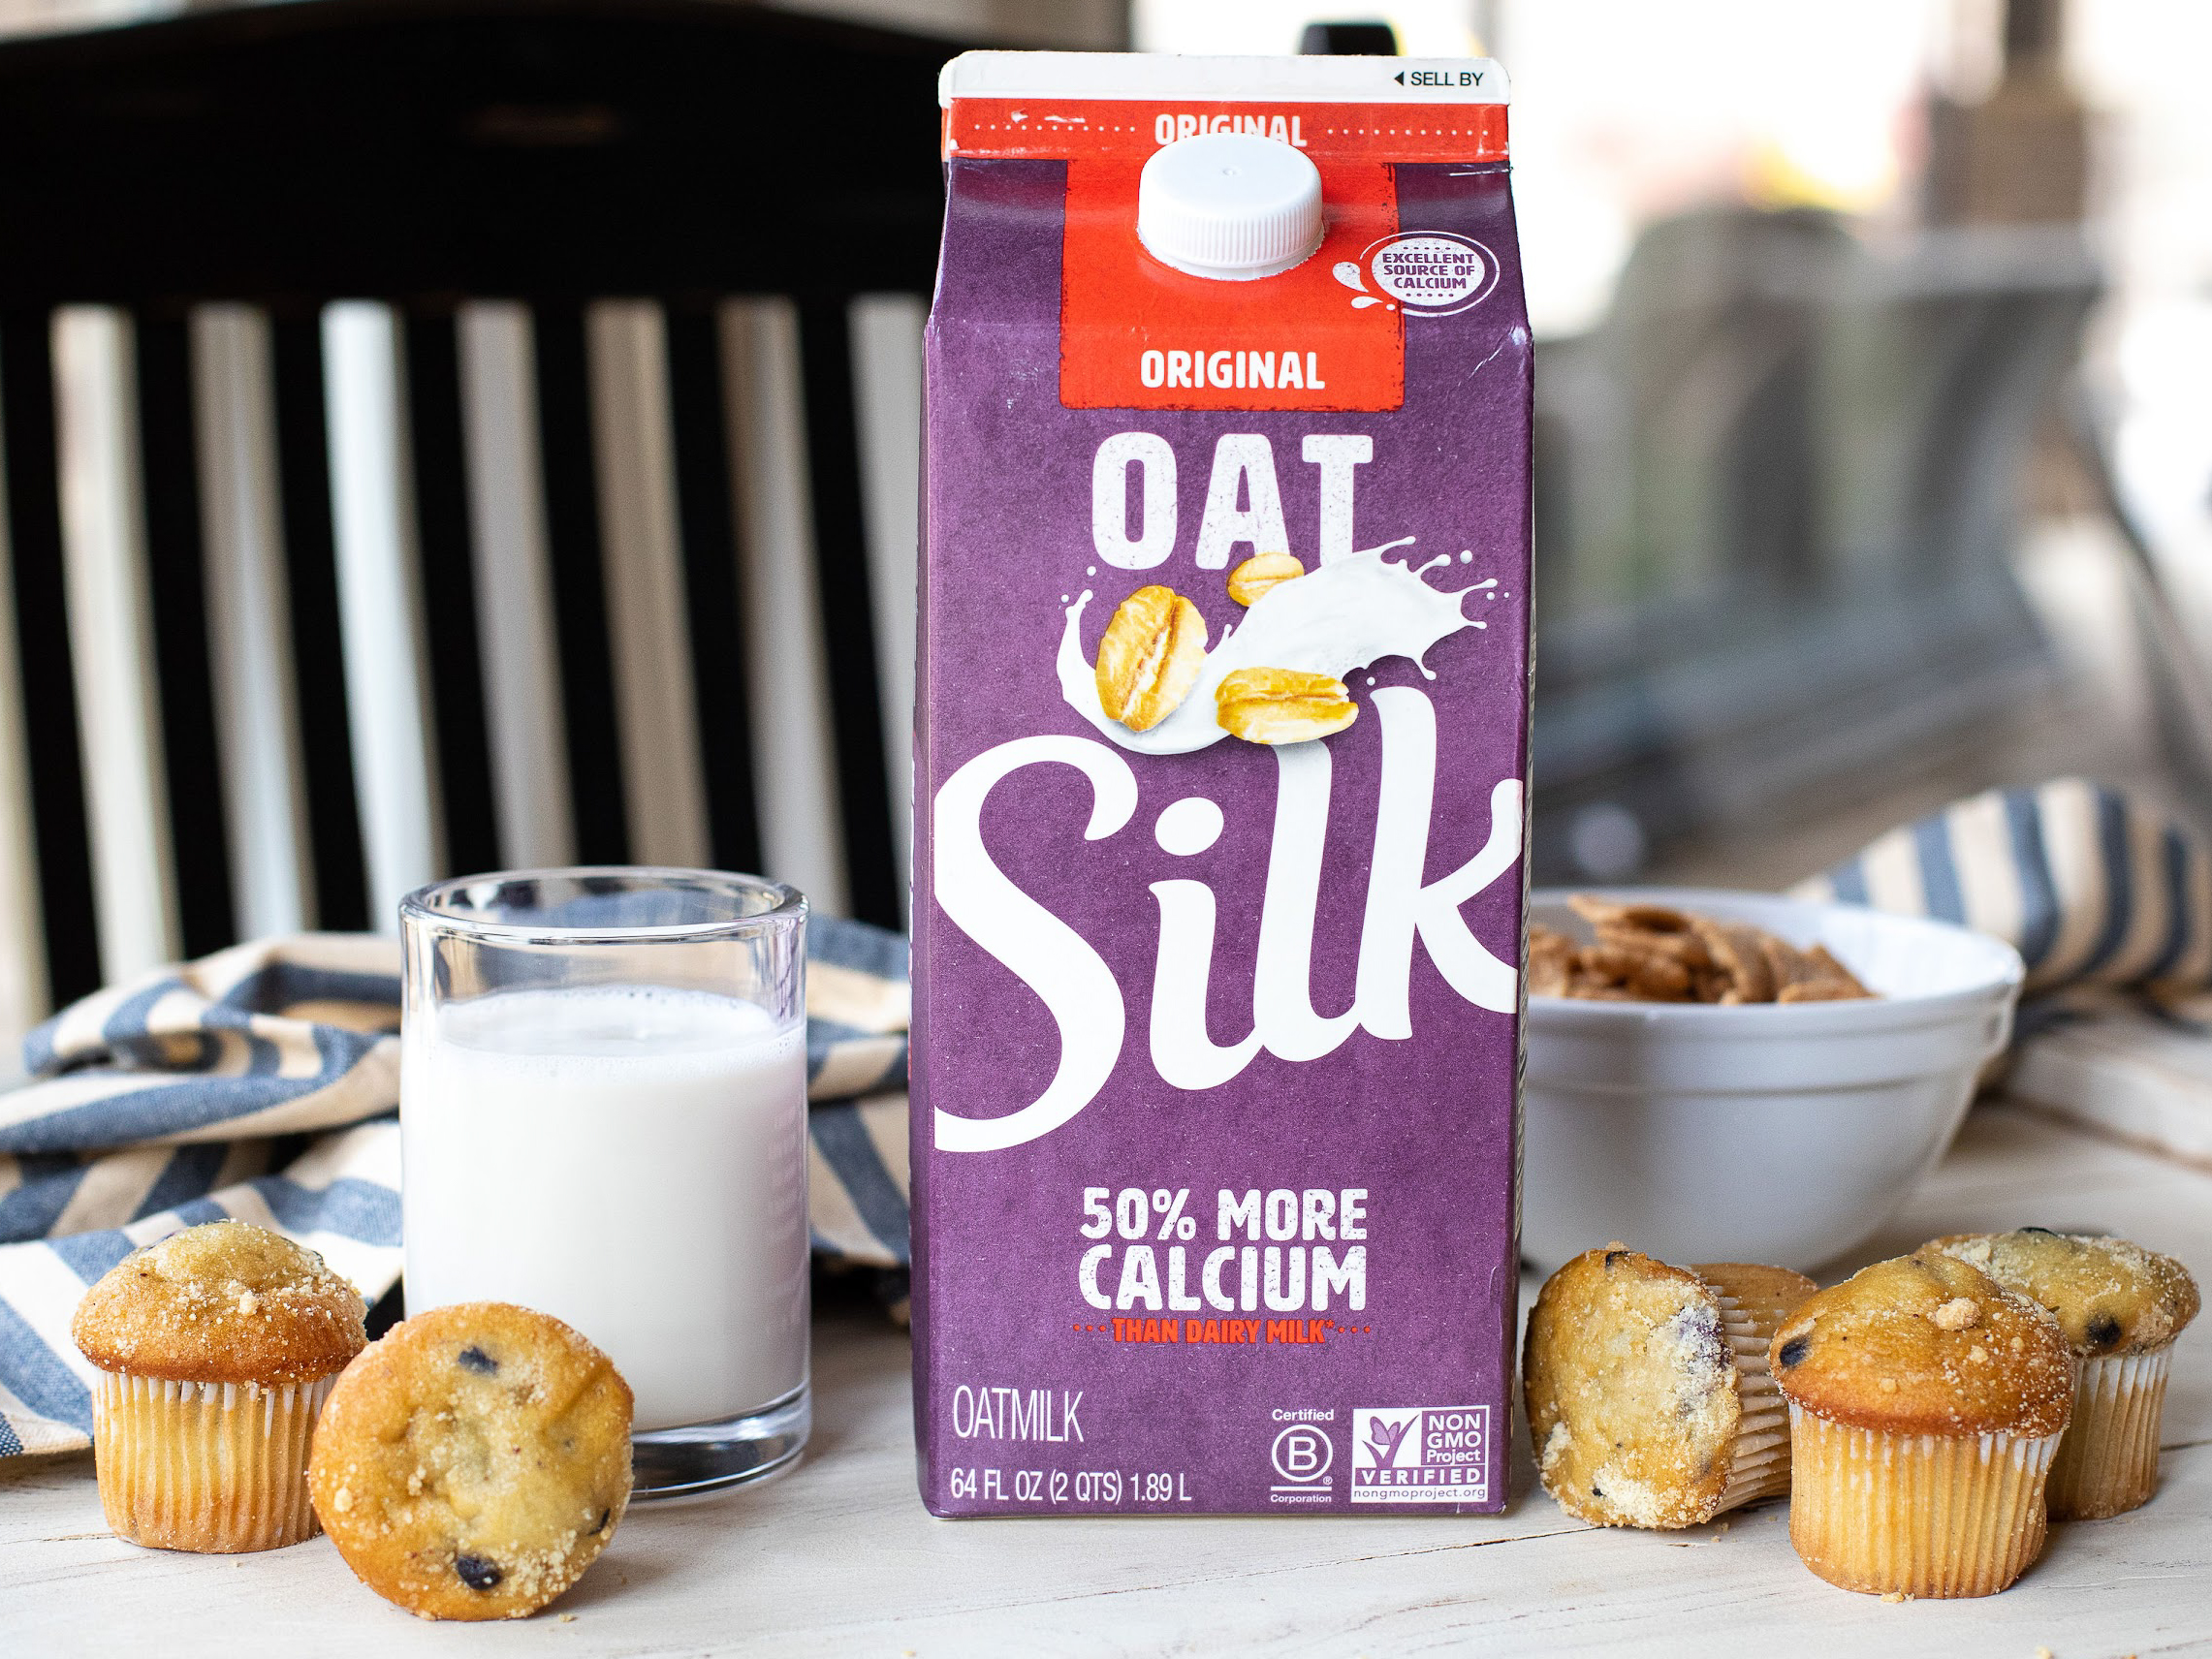 Score Delicious Silk Oatmilk For Just 25¢ At Publix on I Heart Publix